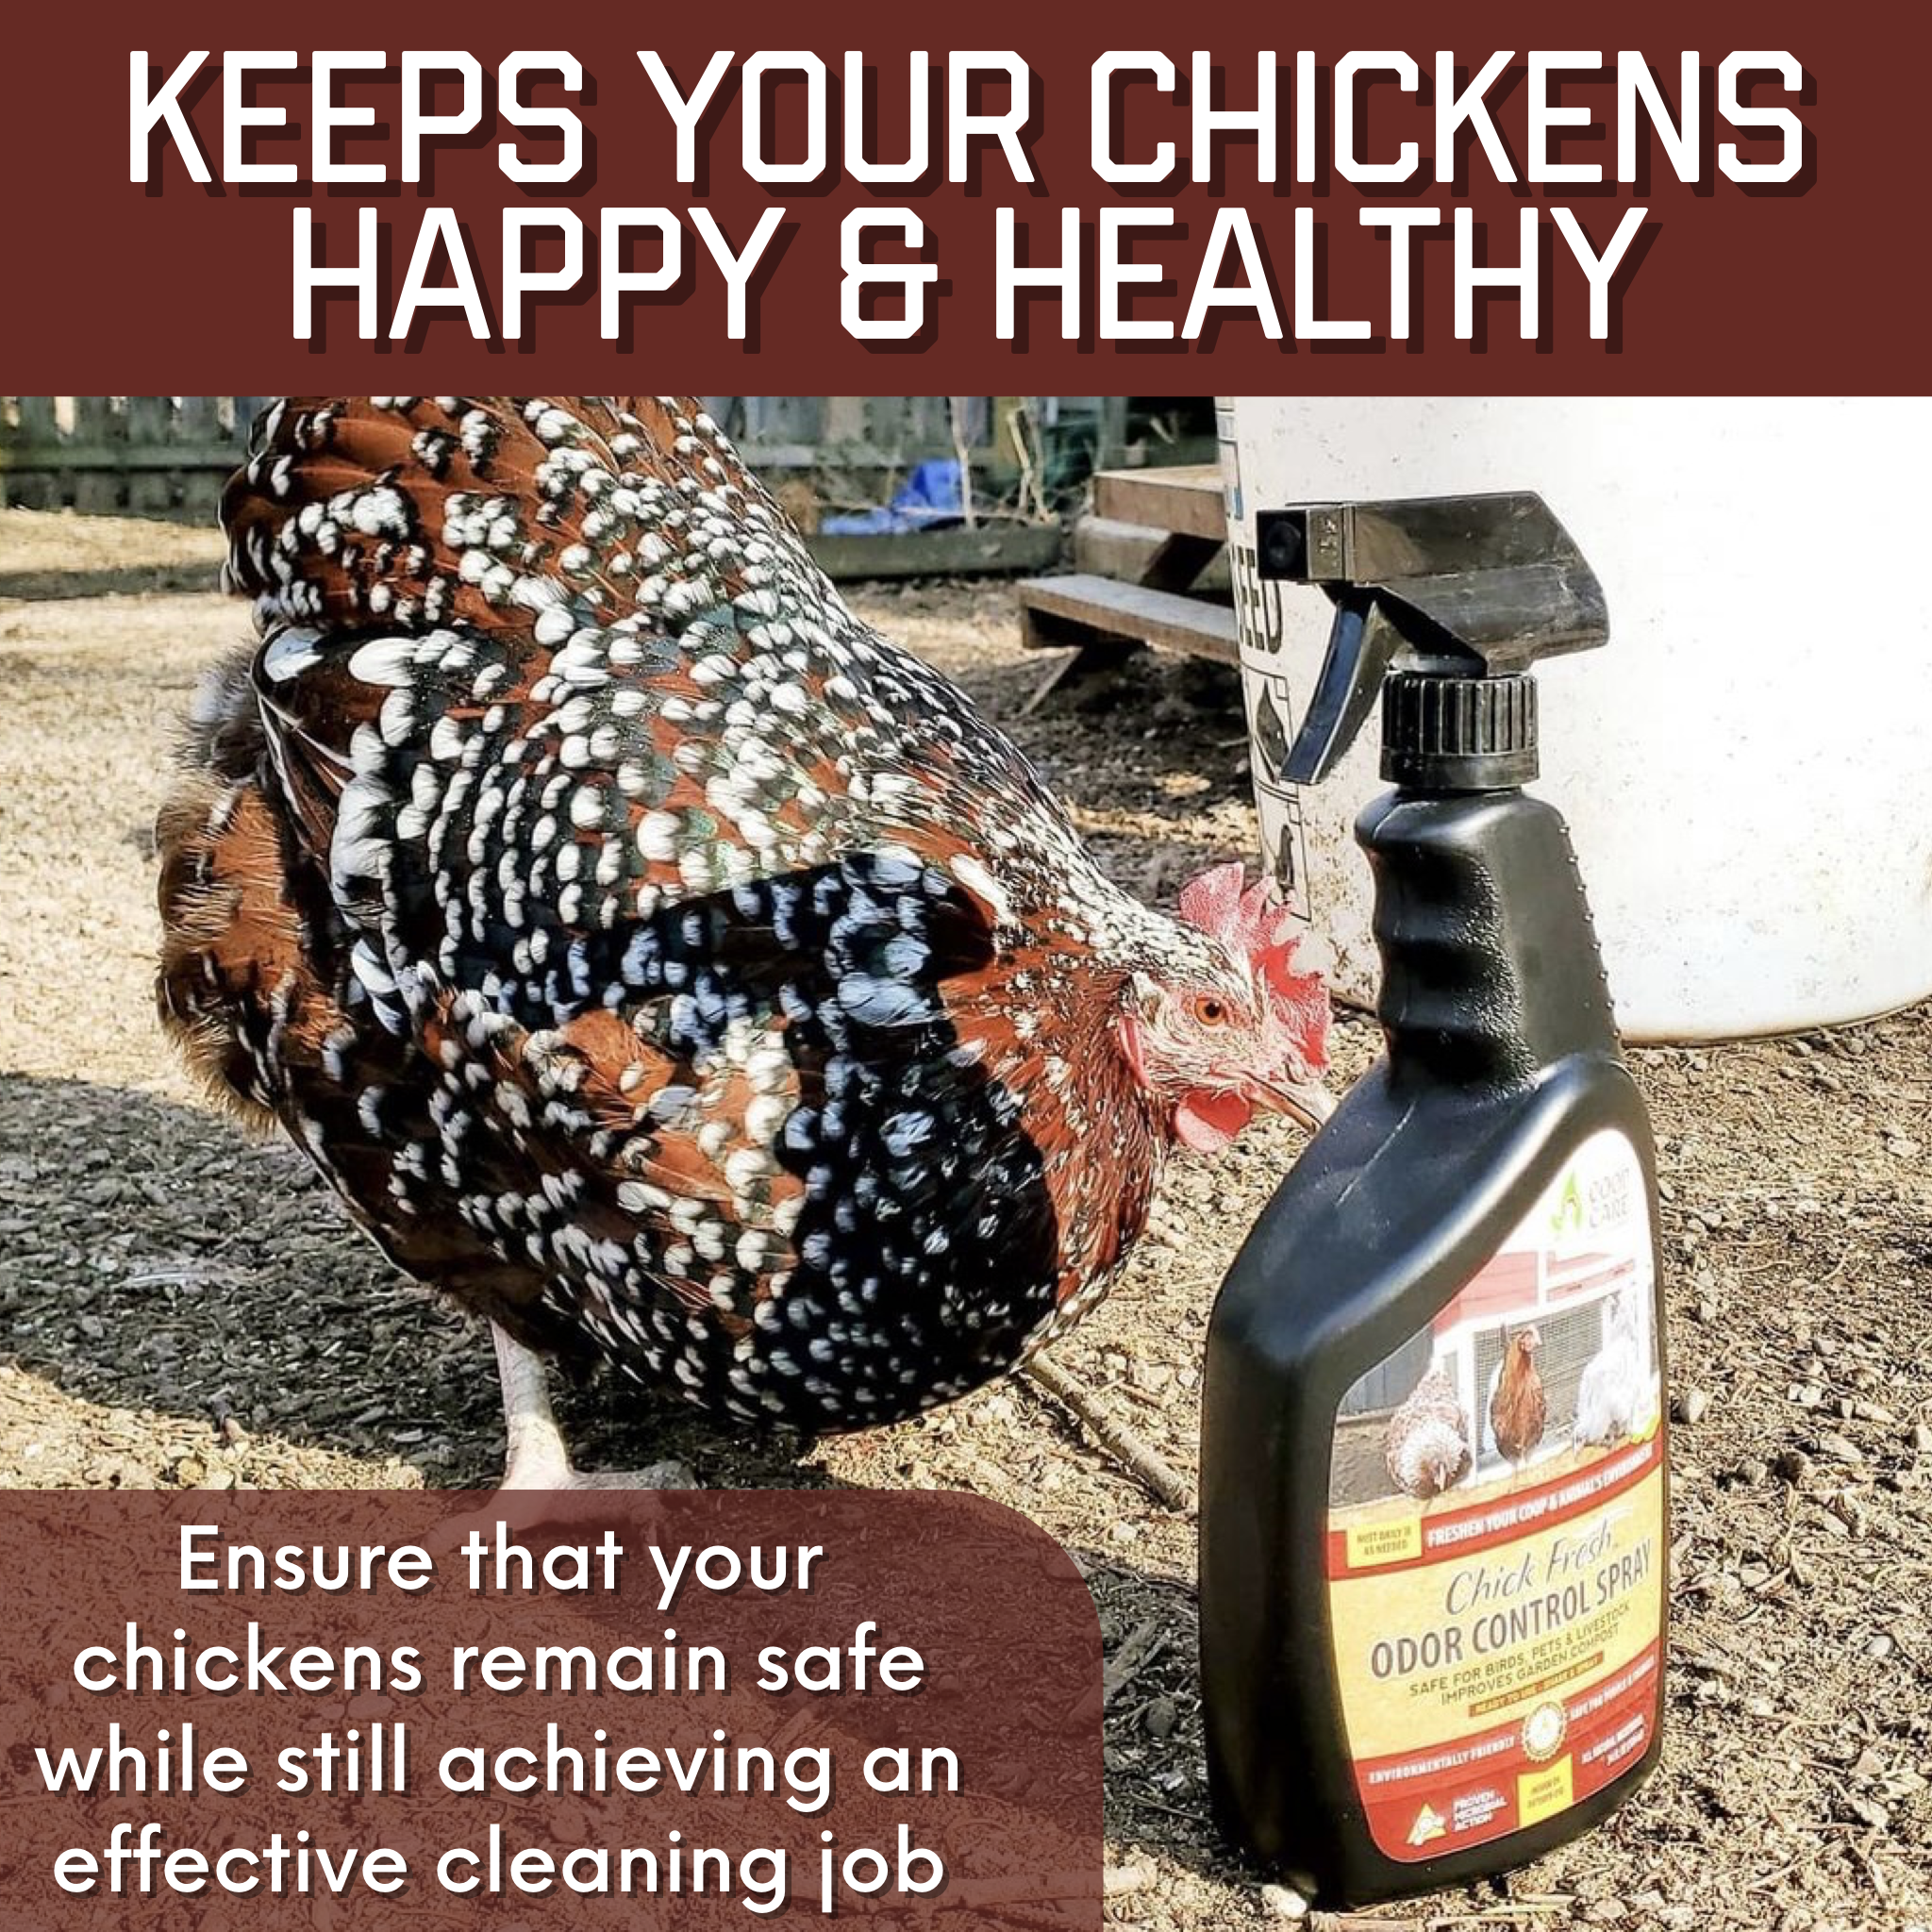 Chick Fresh - Eliminate Chicken Coop & Brooder Odor (24 oz) Works Inside & Outside the House!